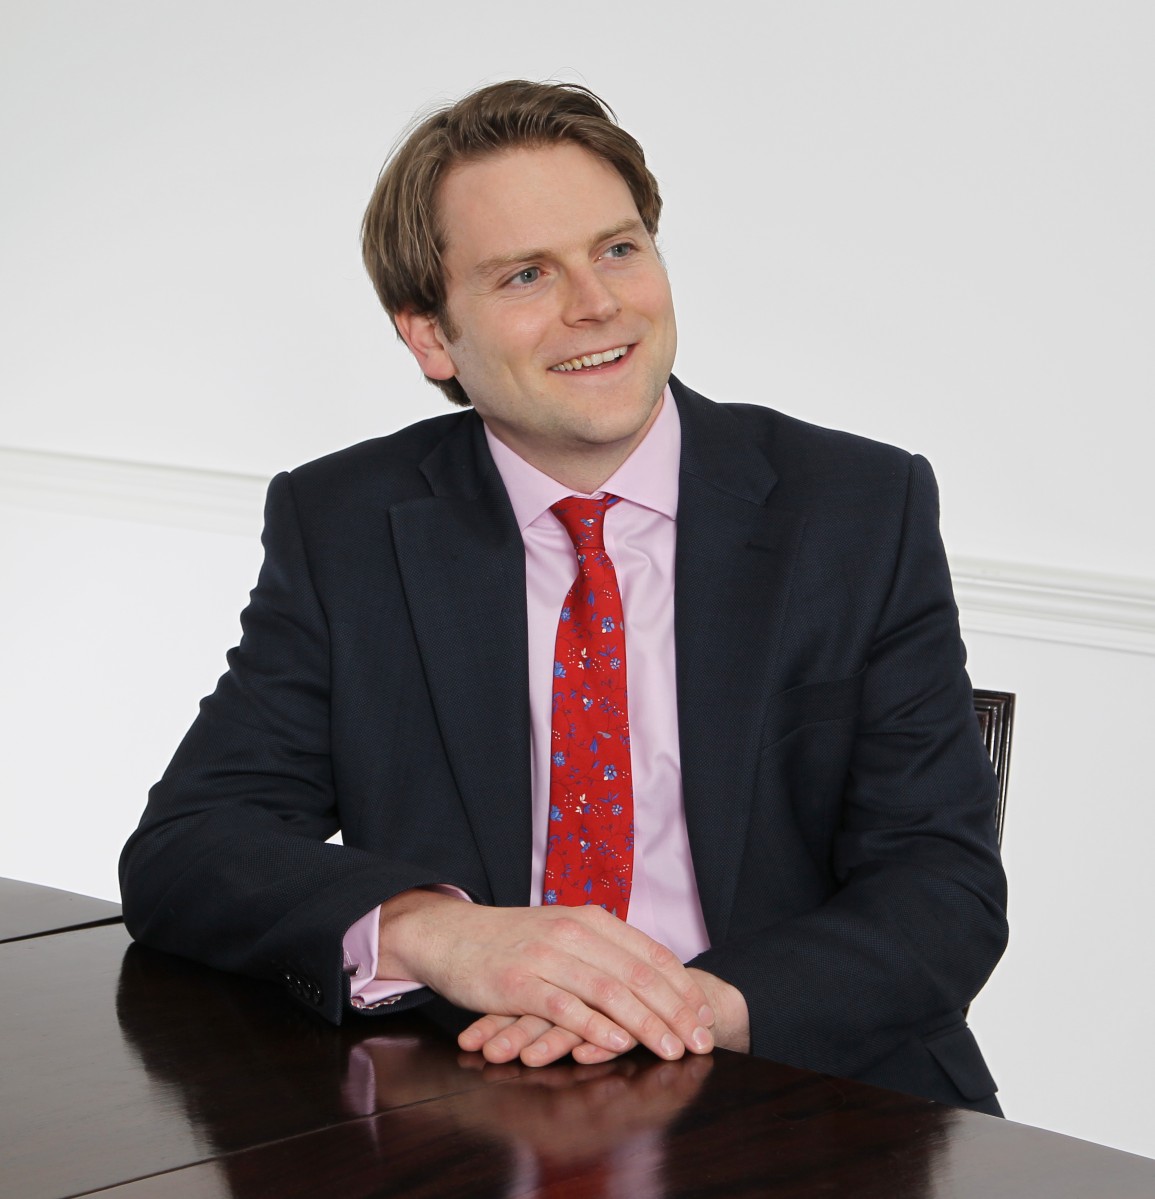 James Brockhurst is senior associate, private client at Forsters LLP